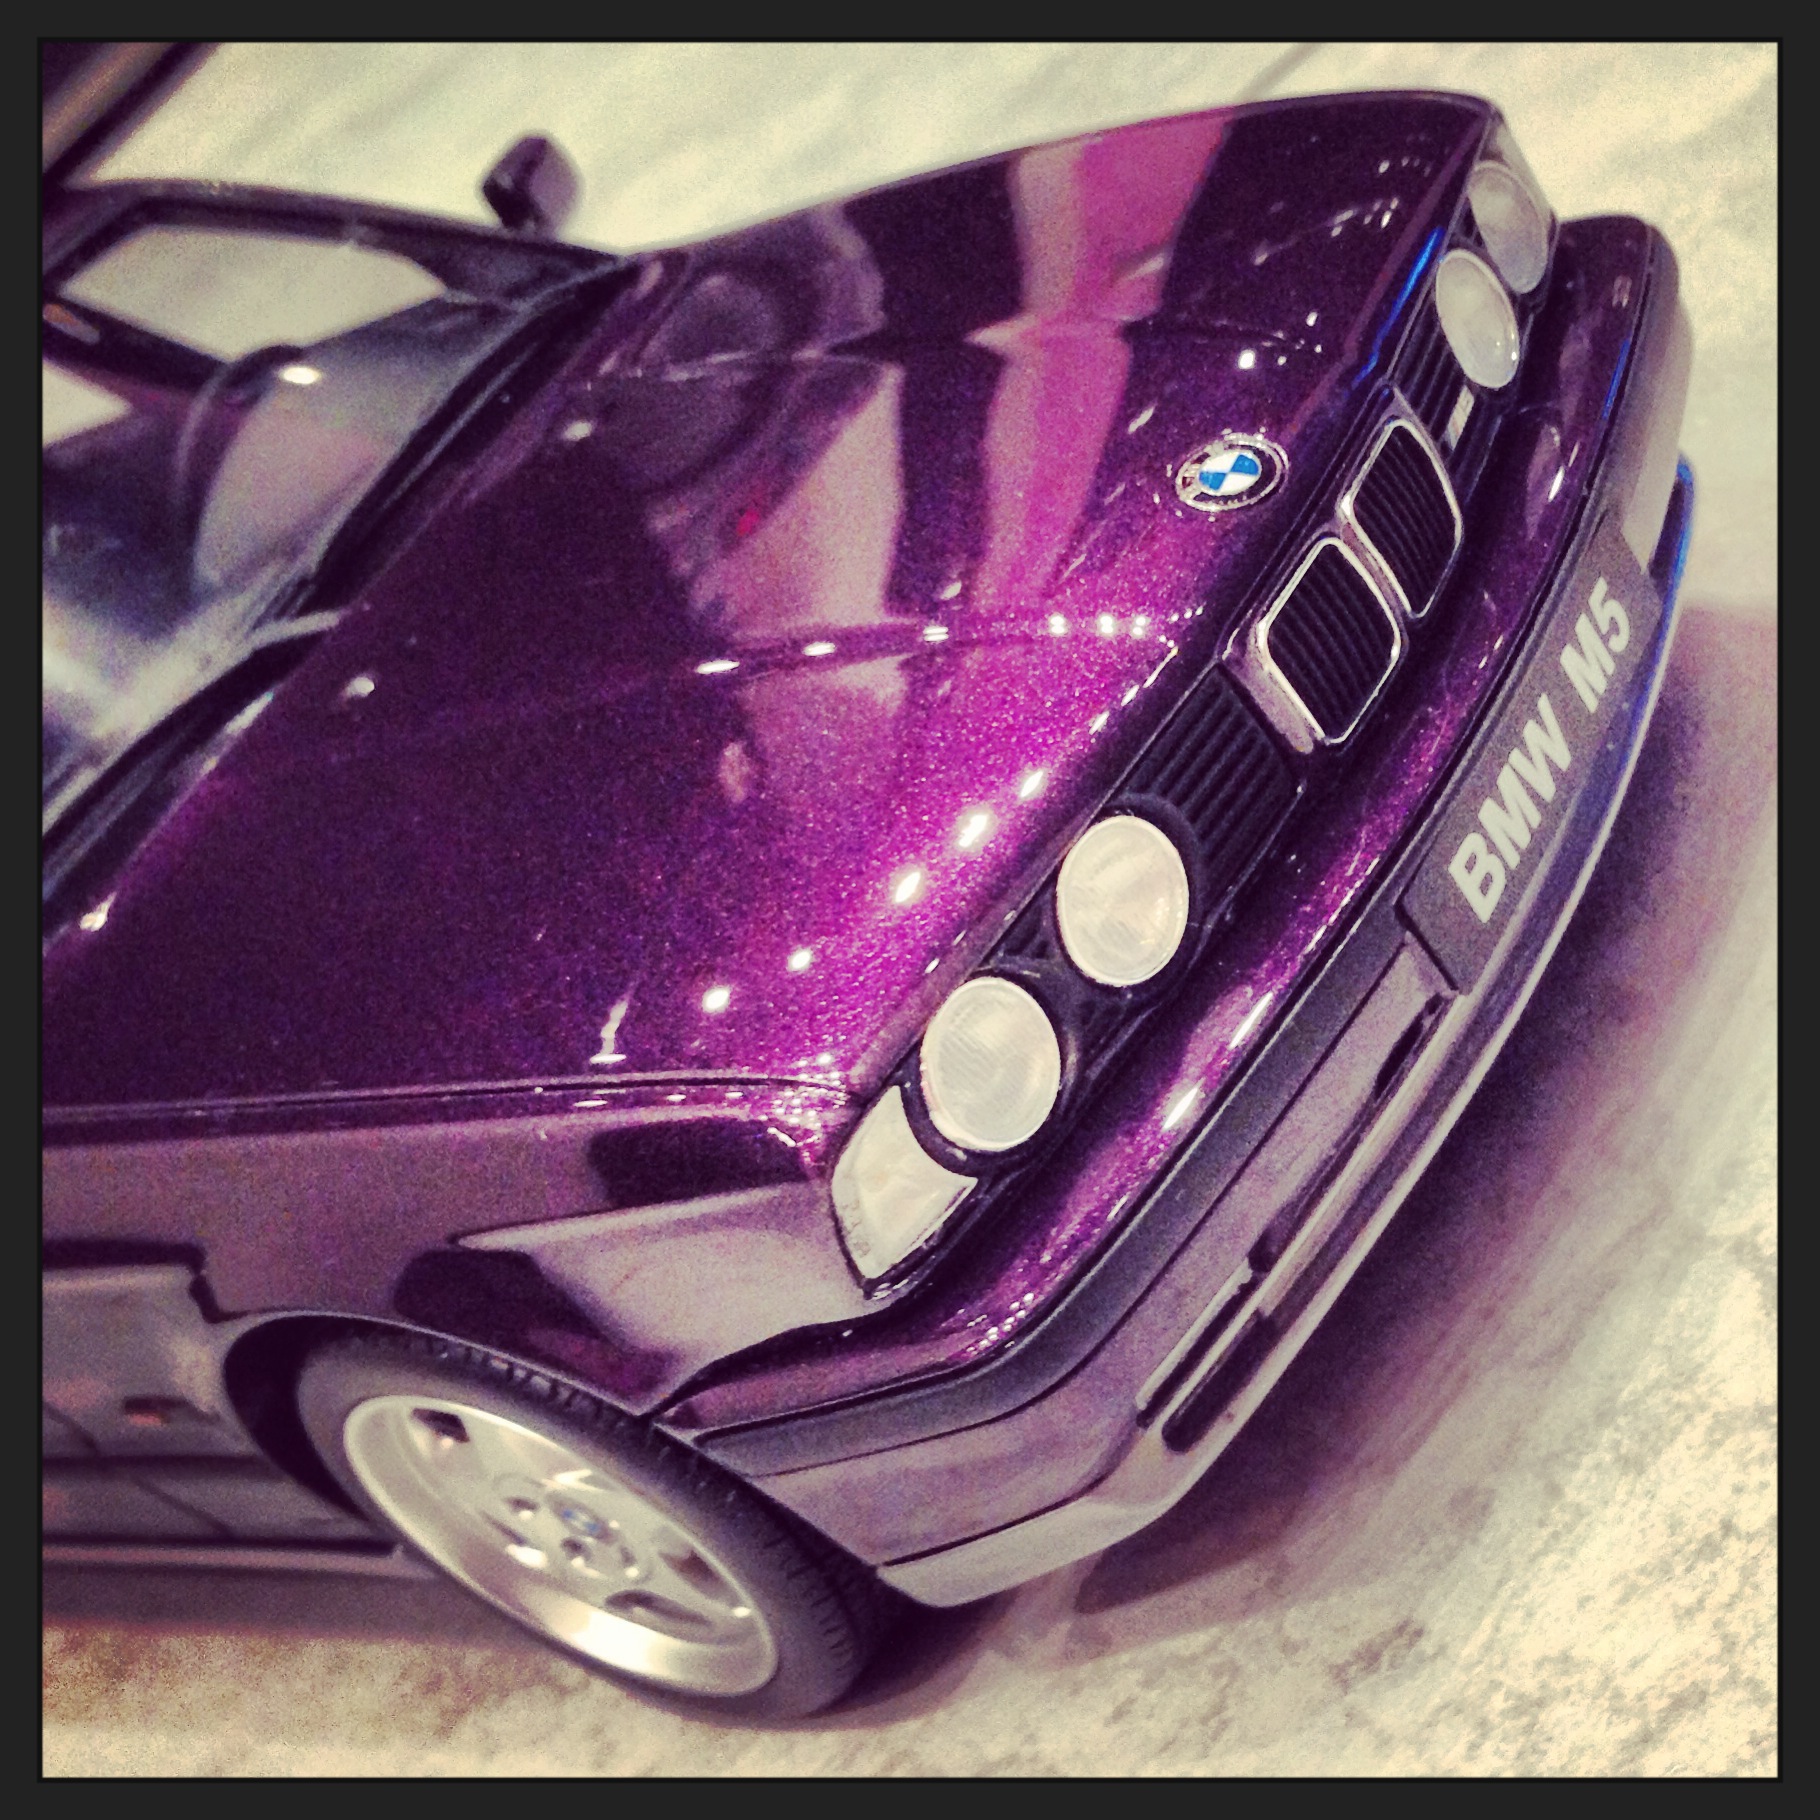 BMW M5 (E34) daytona violet, le 949 of 3,000pcs. (otto)